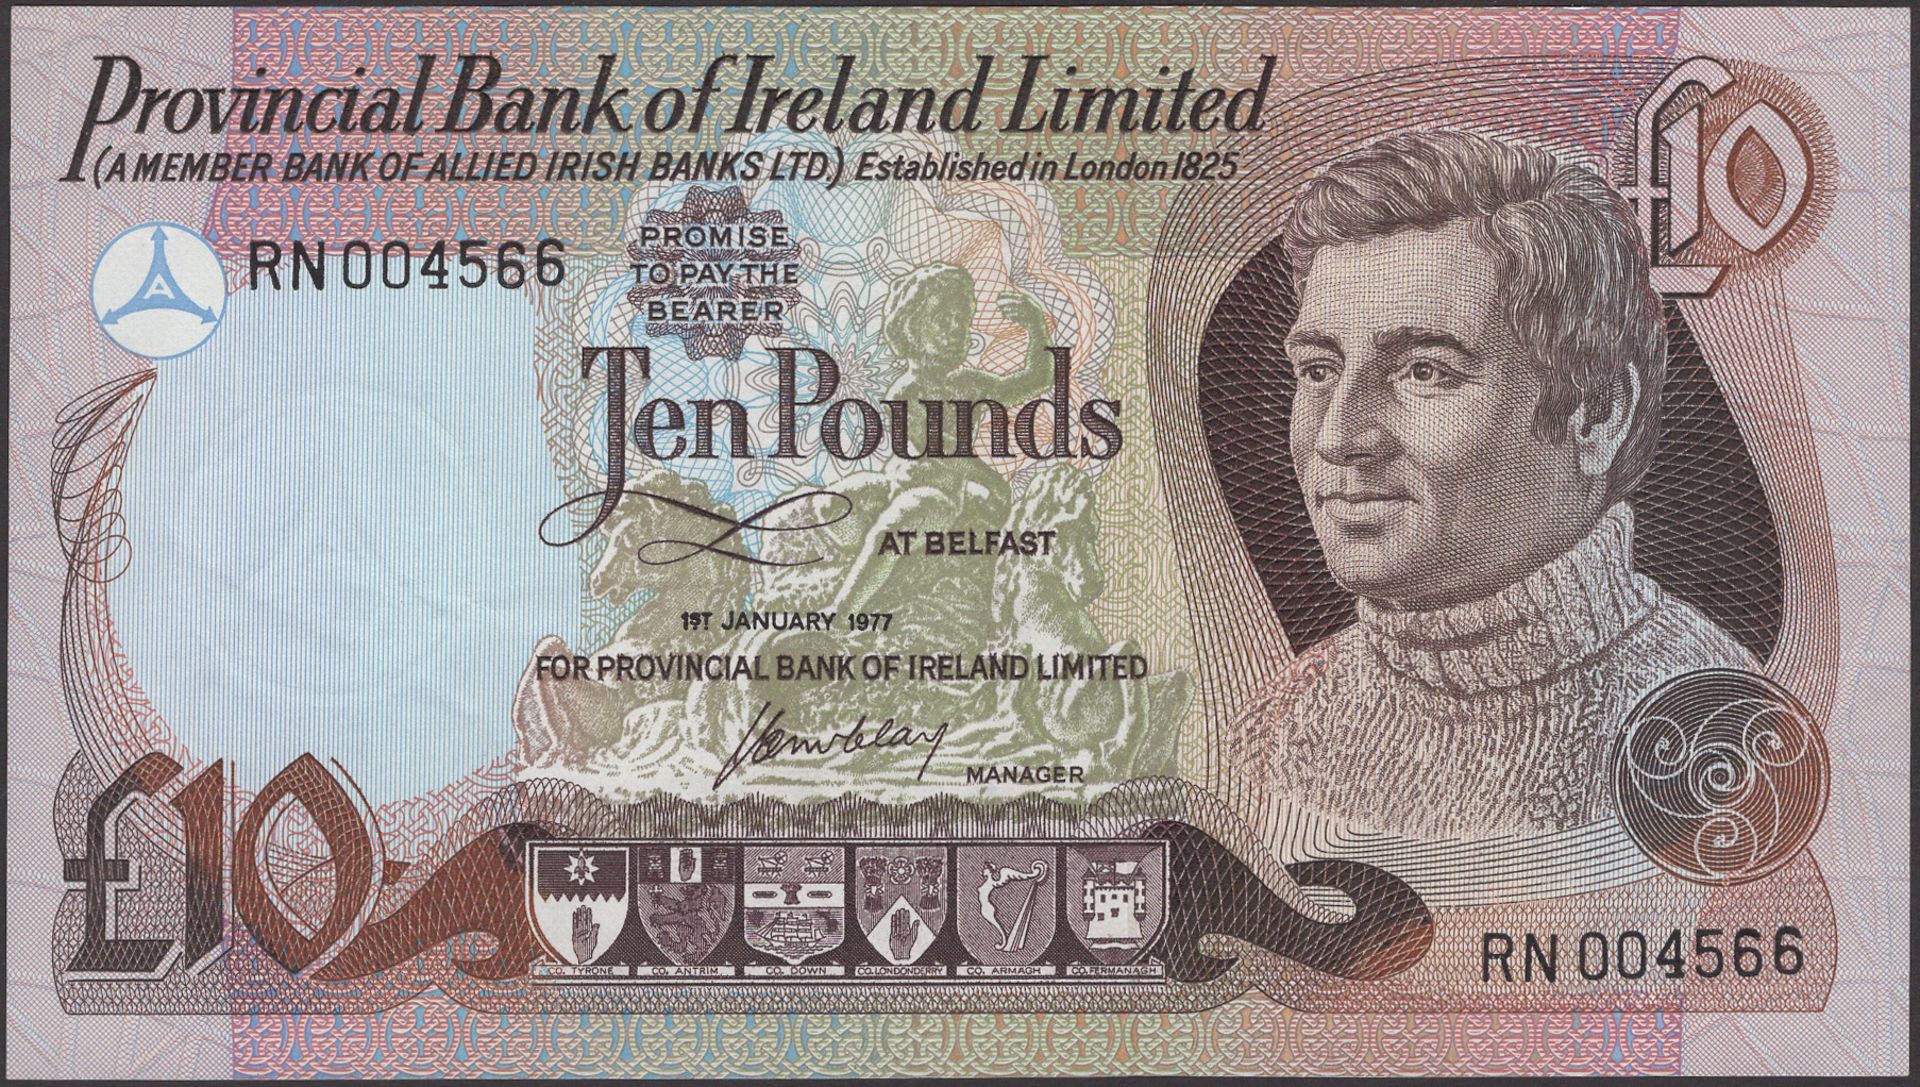 Provincial Bank of Ireland Ltd, Â£10, 1 January 1977, serial number RN004566, McClay signatur...